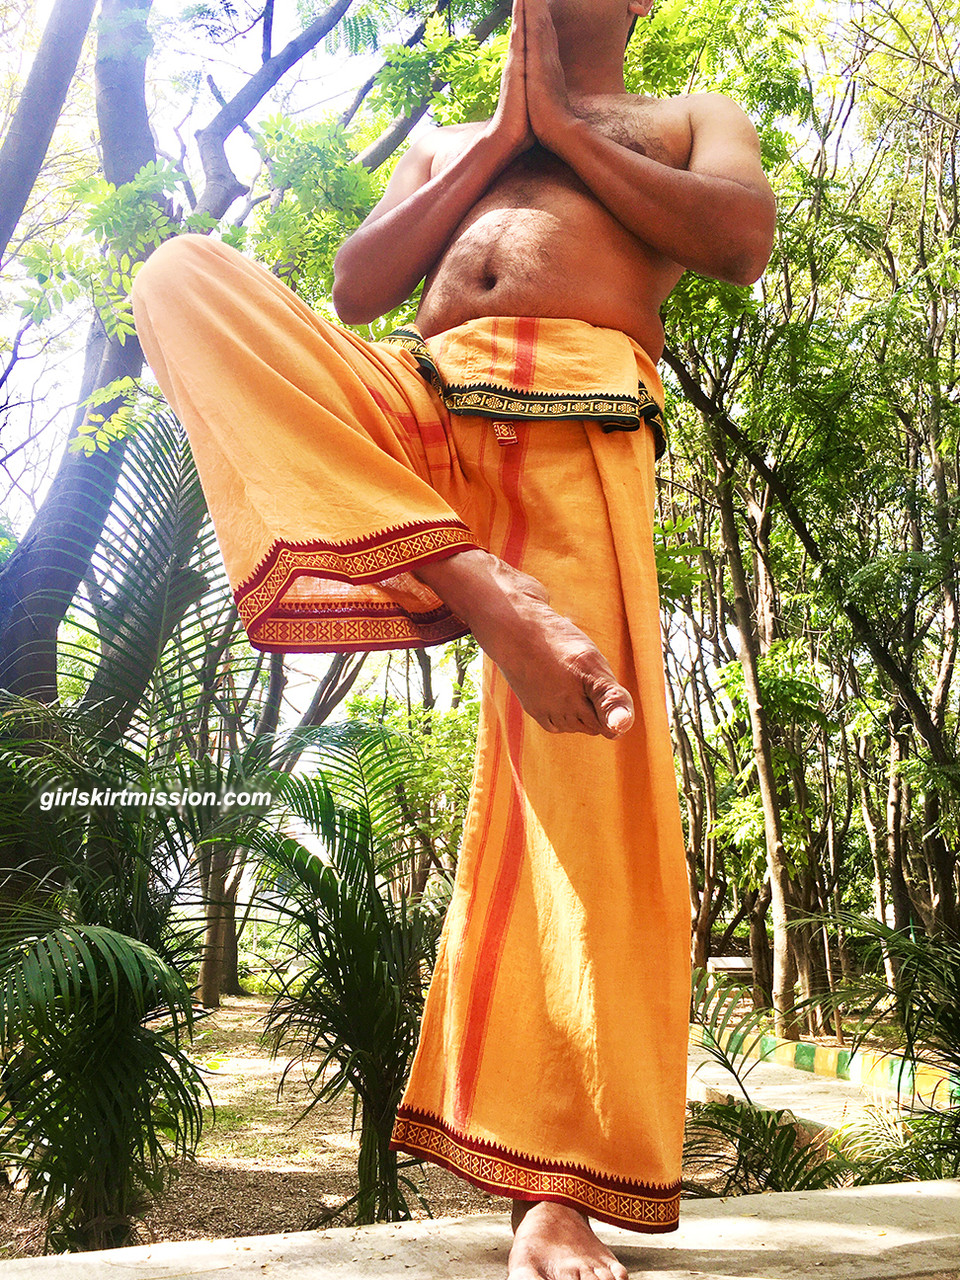 Indian Yoga Pants - TAN - XL - girl skirt mission